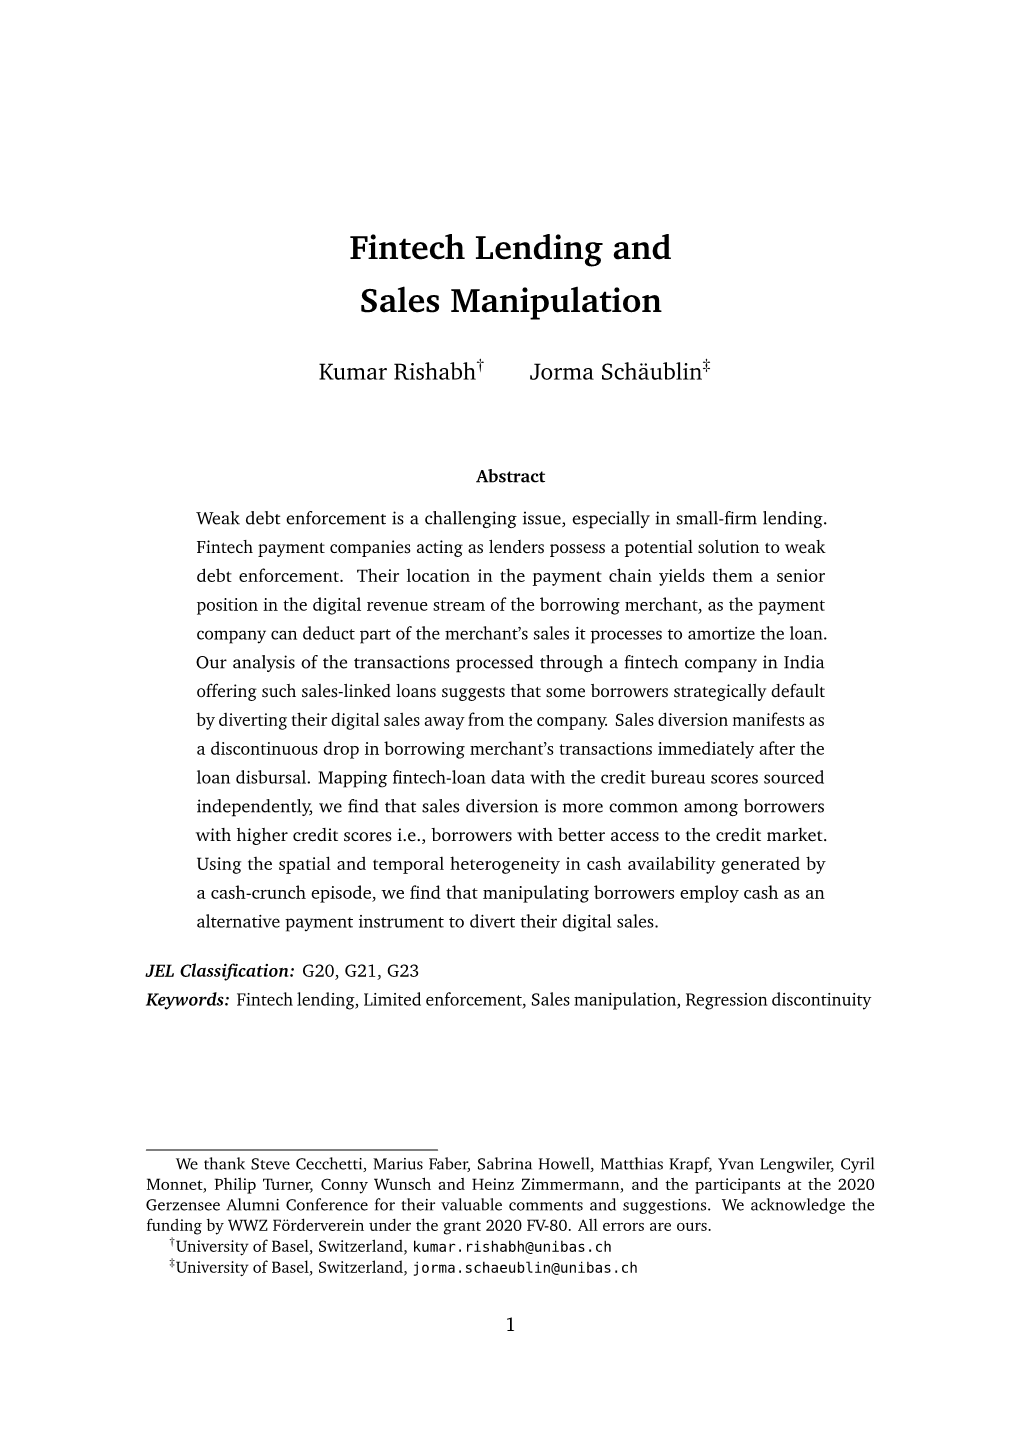 Fintech Lending and Sales Manipulation